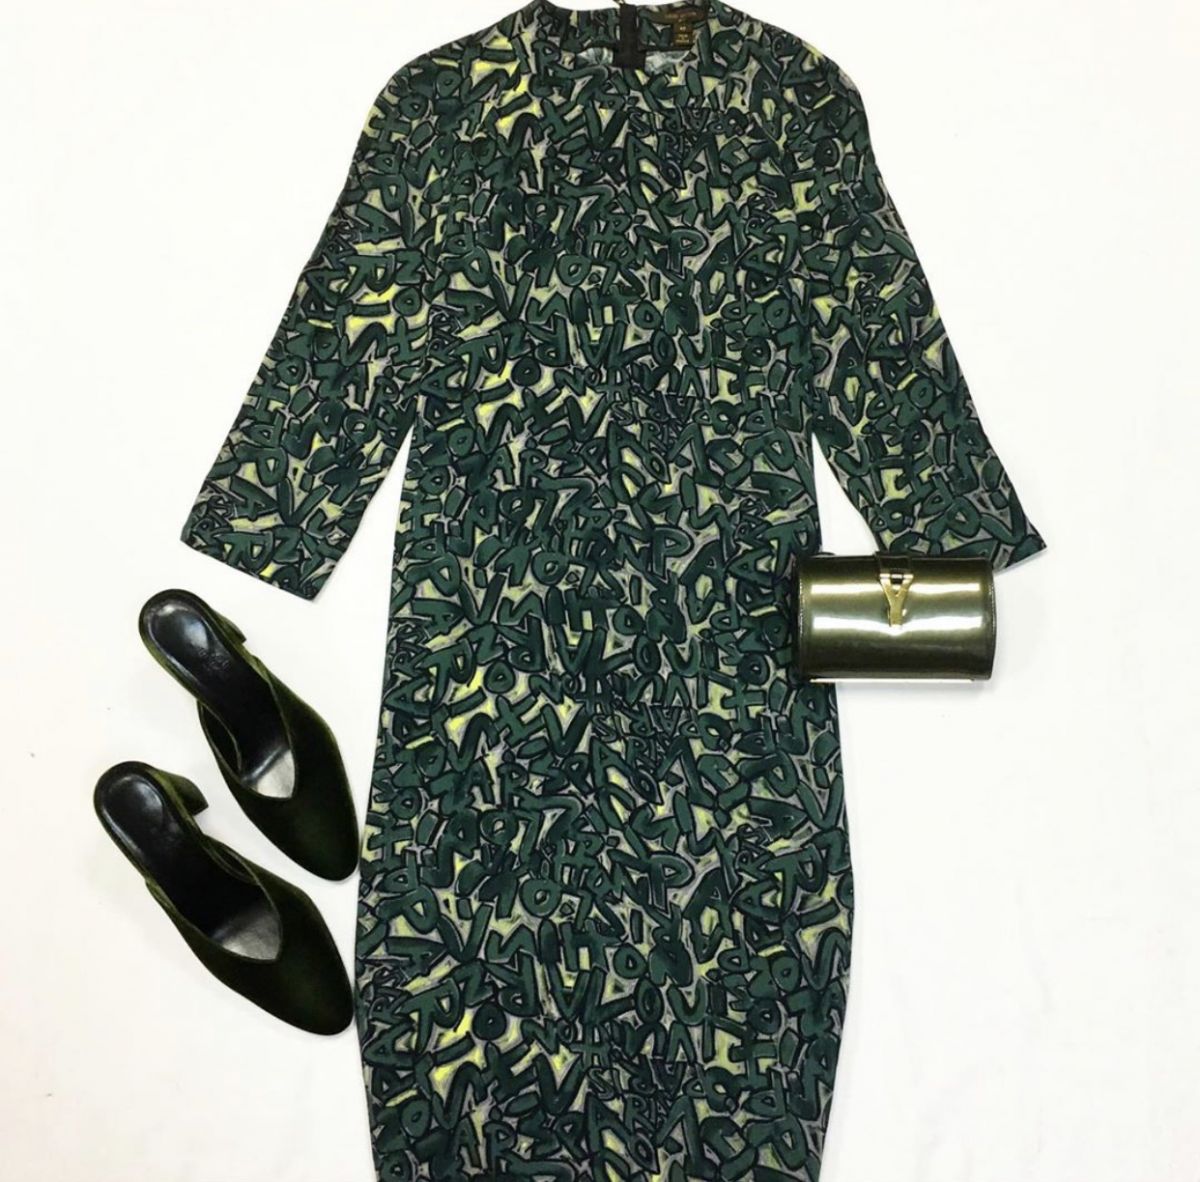 Платье LouisVuitton размер 40 цена 12 308 руб Мюли Hermes размер 39 цена 38 463 руб Клатч YSL 